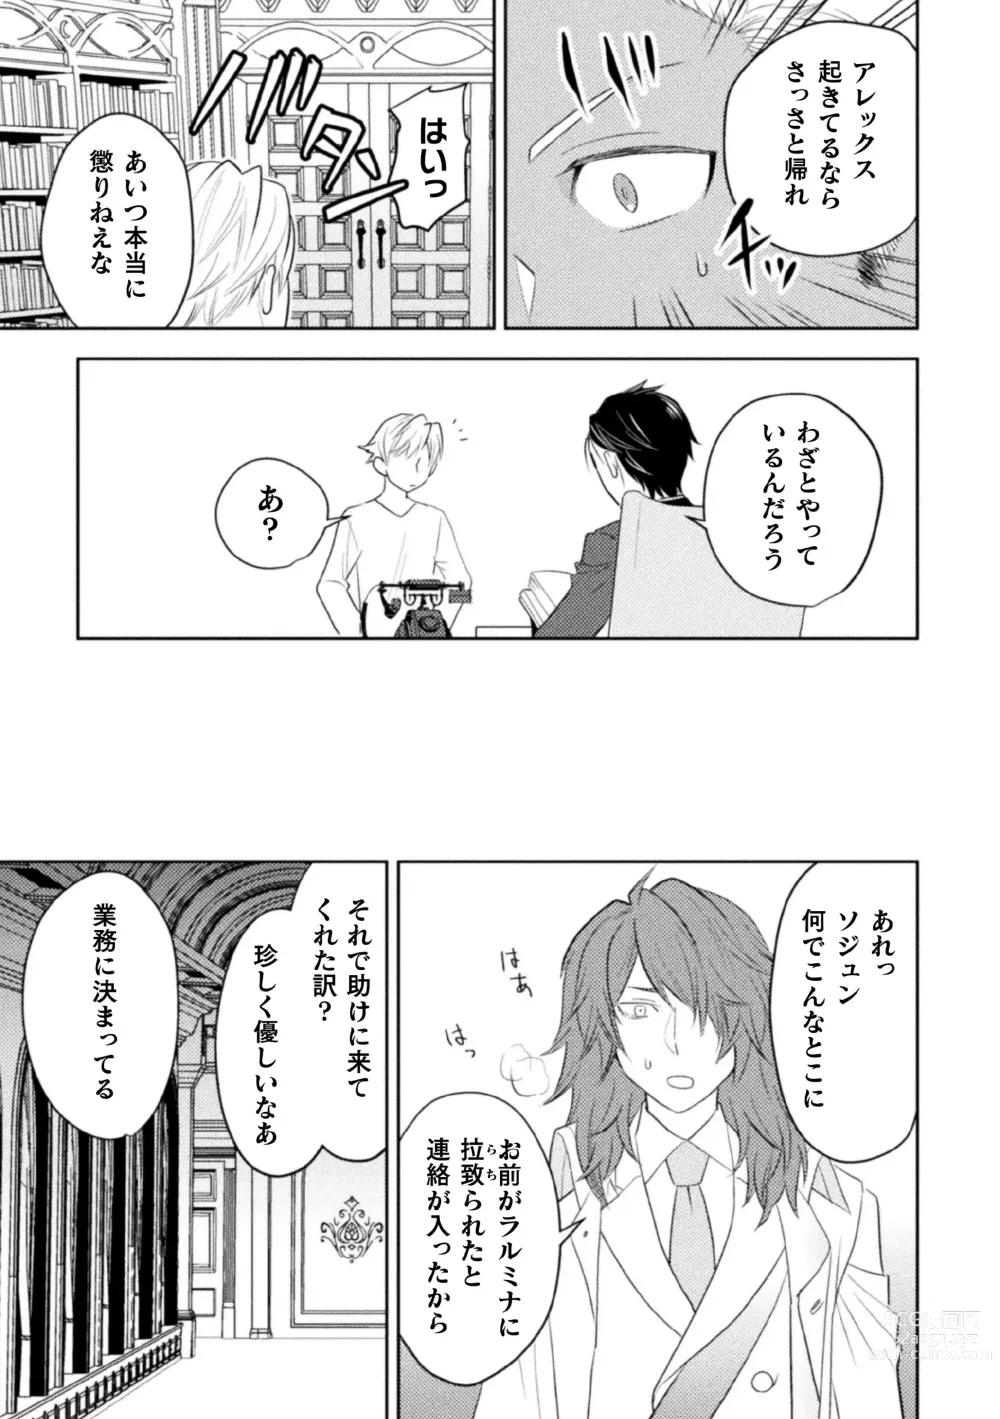 Page 7 of manga Zekkai Rougoku Kan Eien no Rougoku Kouhen